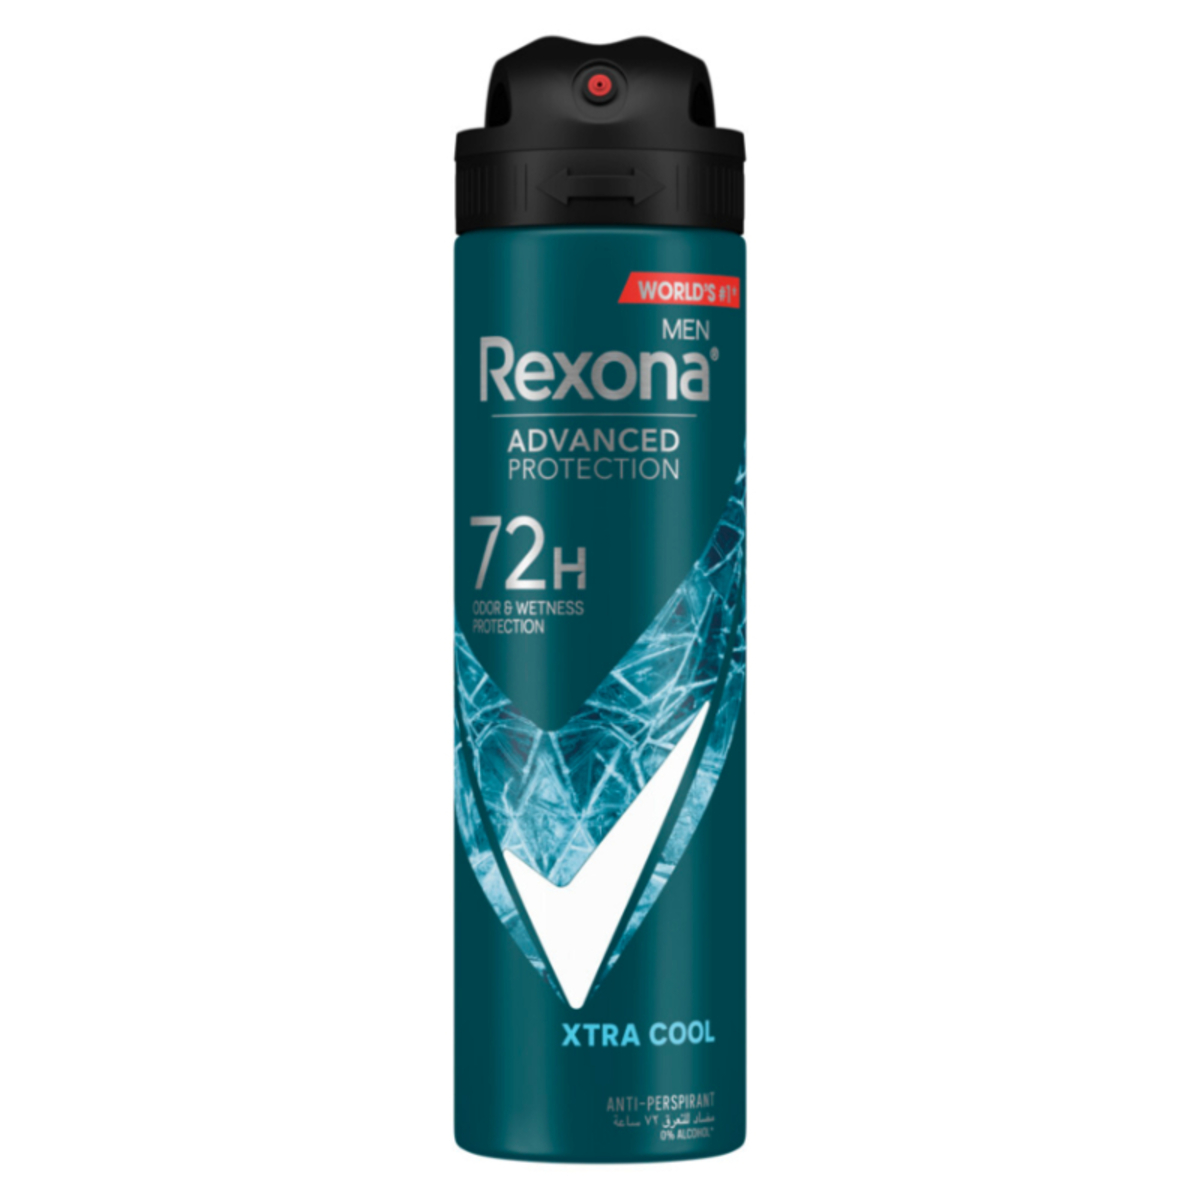 Rexona Advanced Protection 72H Xtra Cool Anti-Perspirant Deodorant Spray for Men 2 x 150 ml